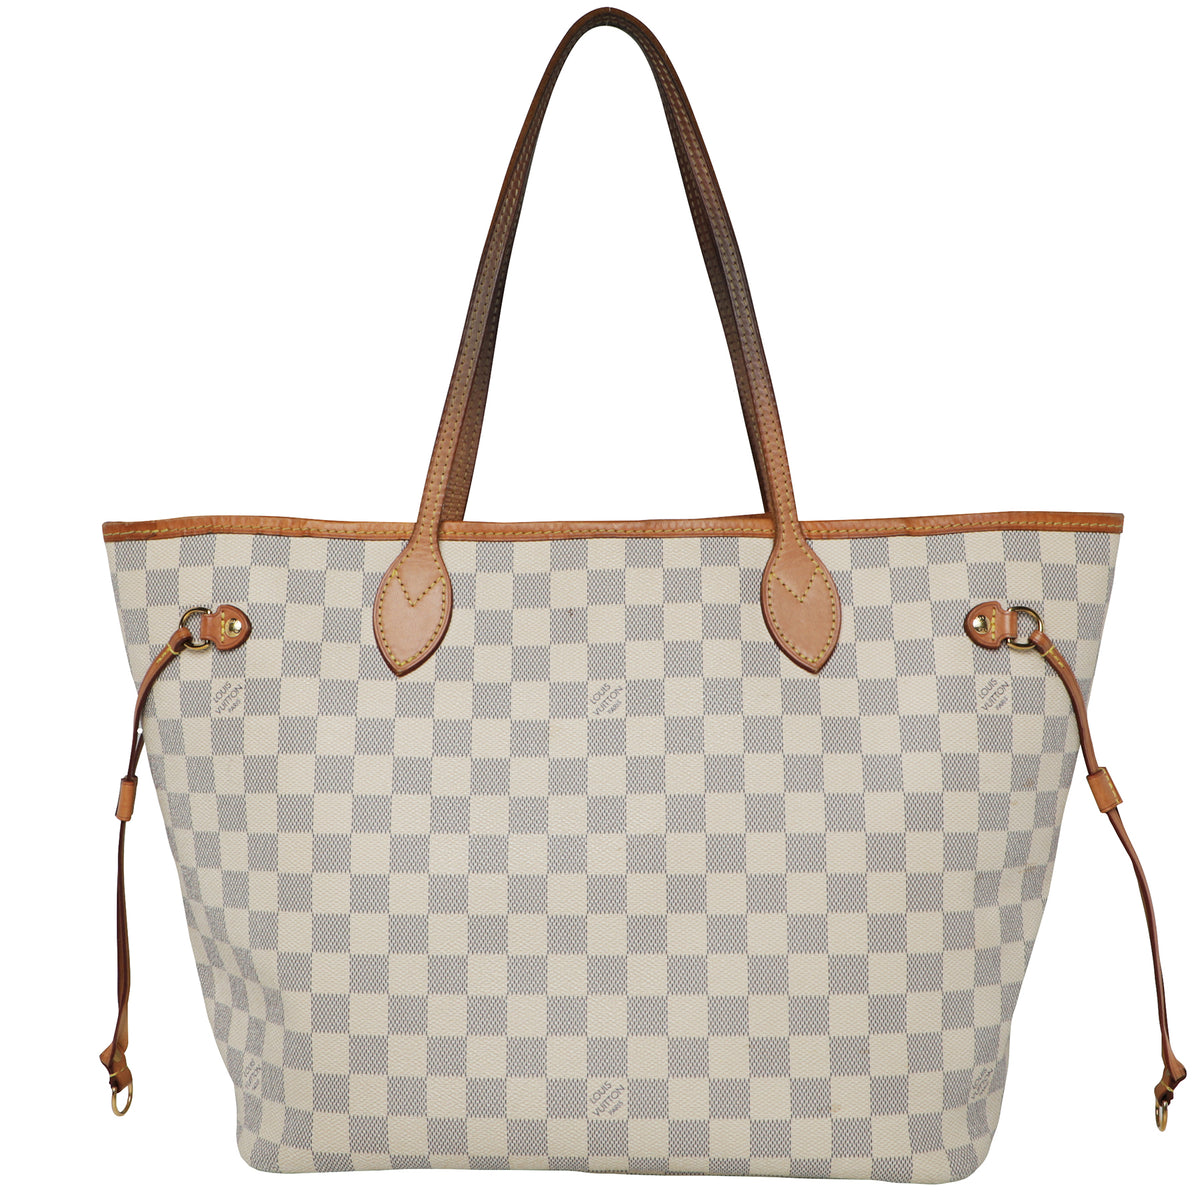 Authentic LOUIS VUITTON Bag Purse for Sale in Panama City